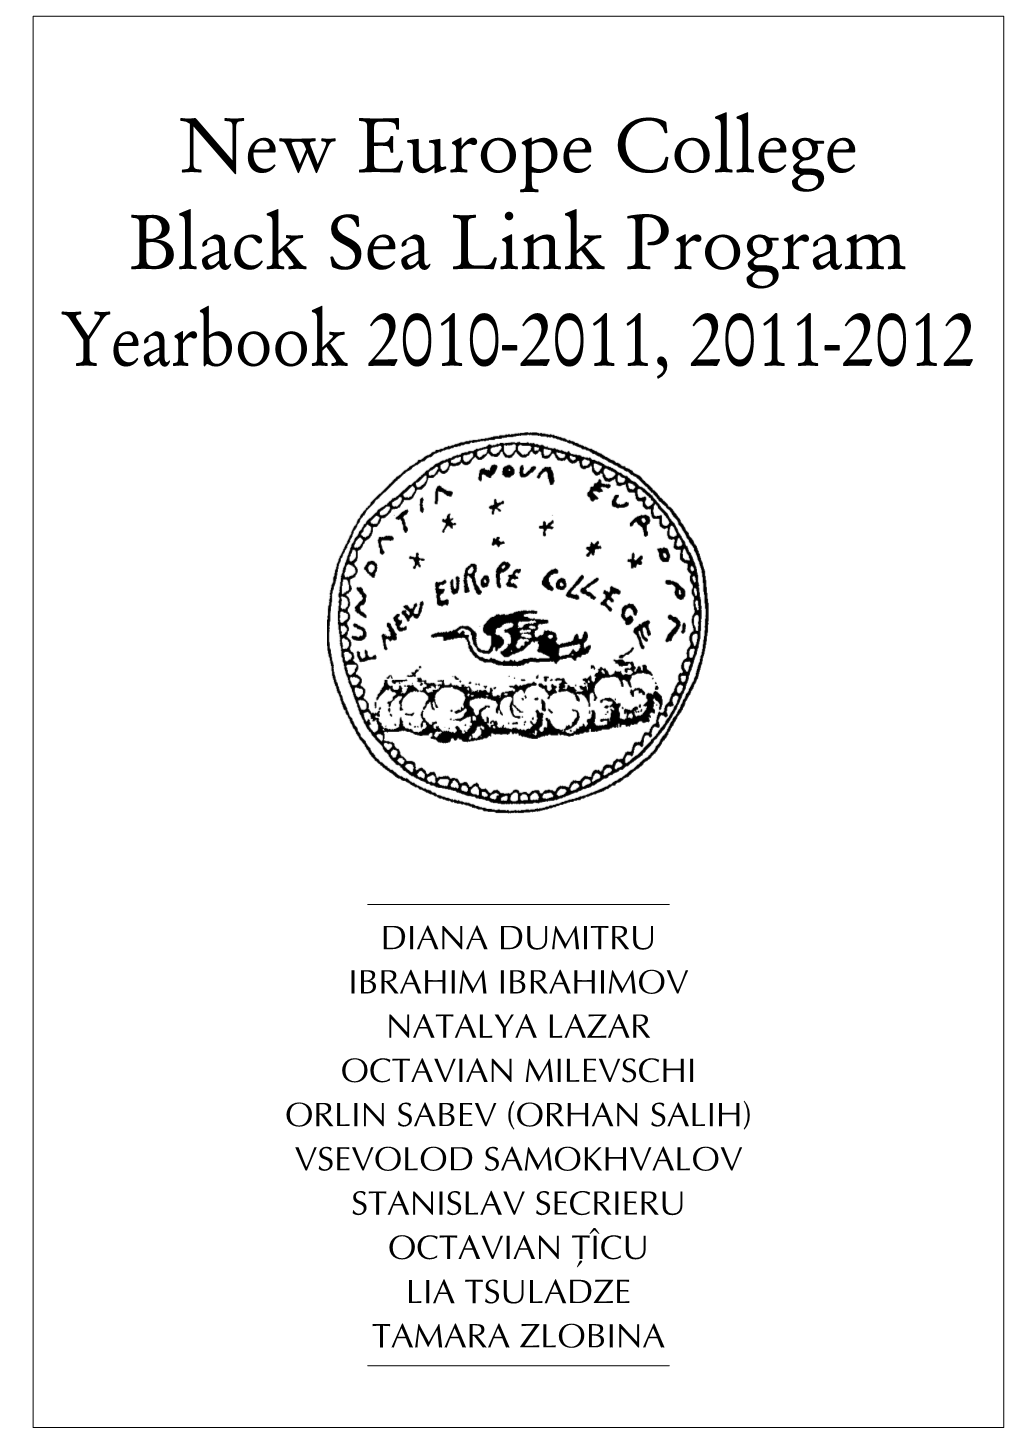 New Europe College Black Sea Link Program Yearbook 2010-2011, 2011-2012